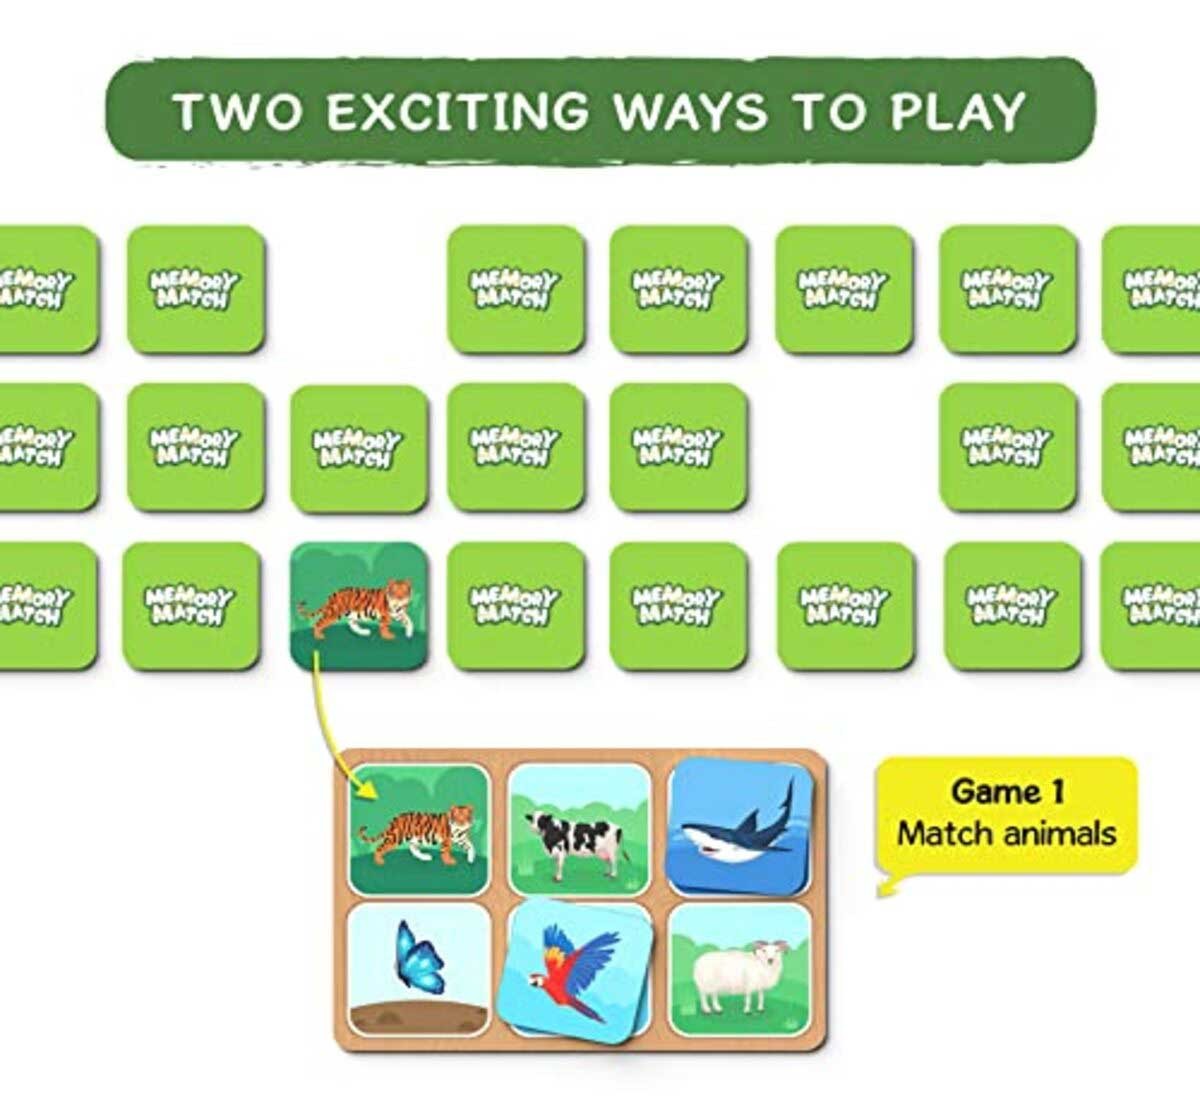 Skillmatics Memory for Animal Planet Board Game for Kids 3Y+, Multicolour